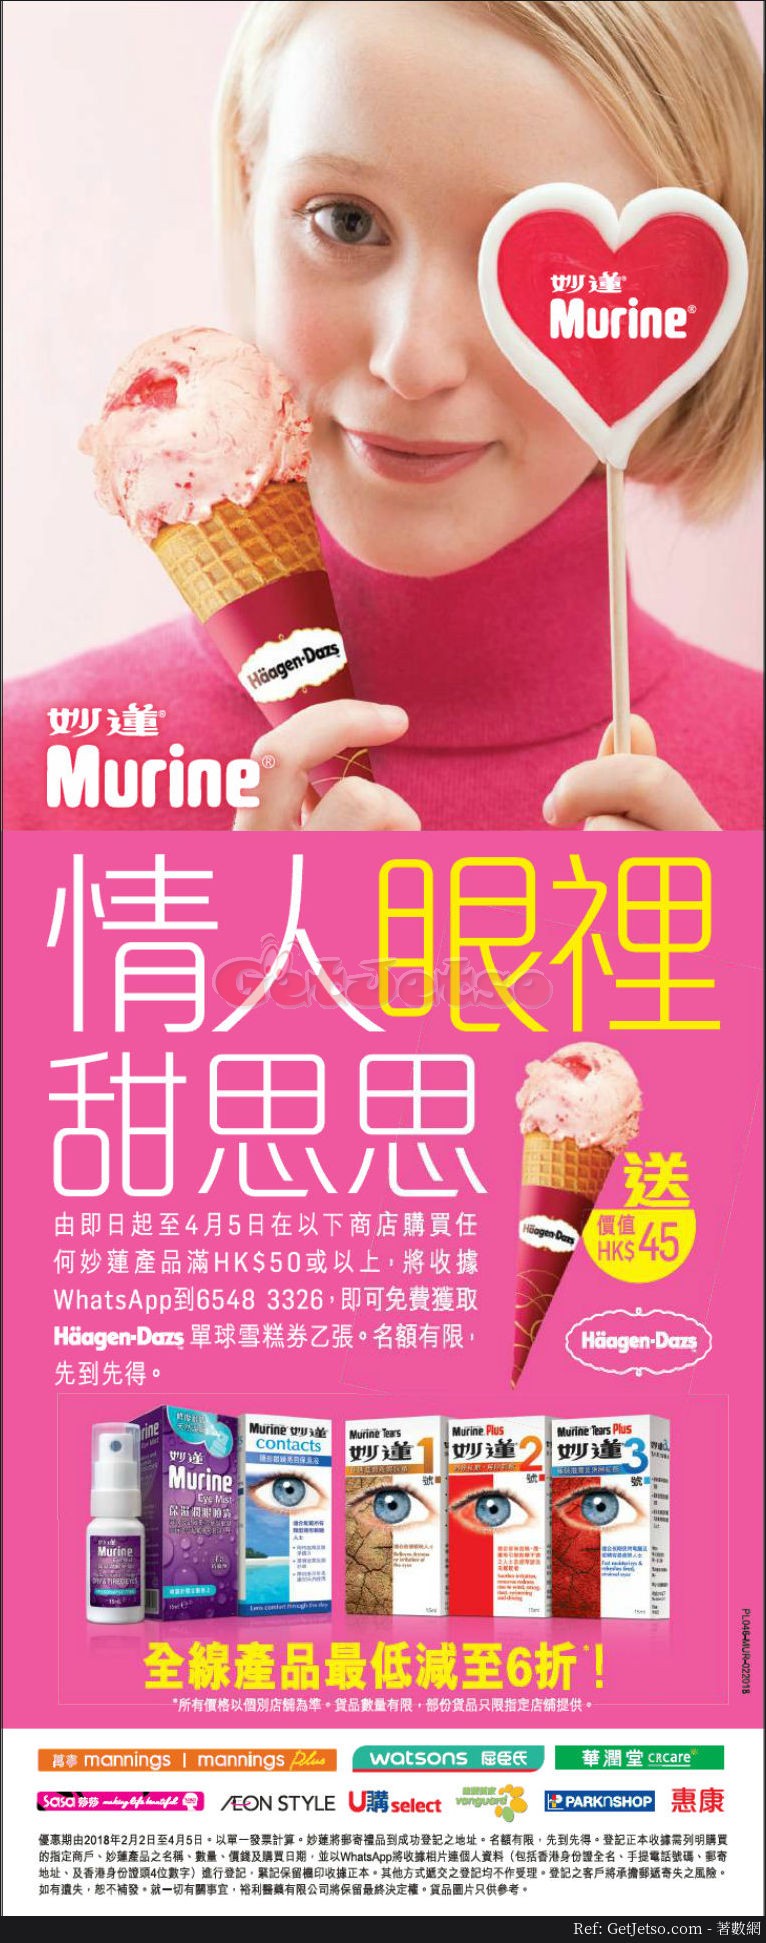 Murine 妙蓮全線產品低至6折優惠(至18年4月5日)圖片1